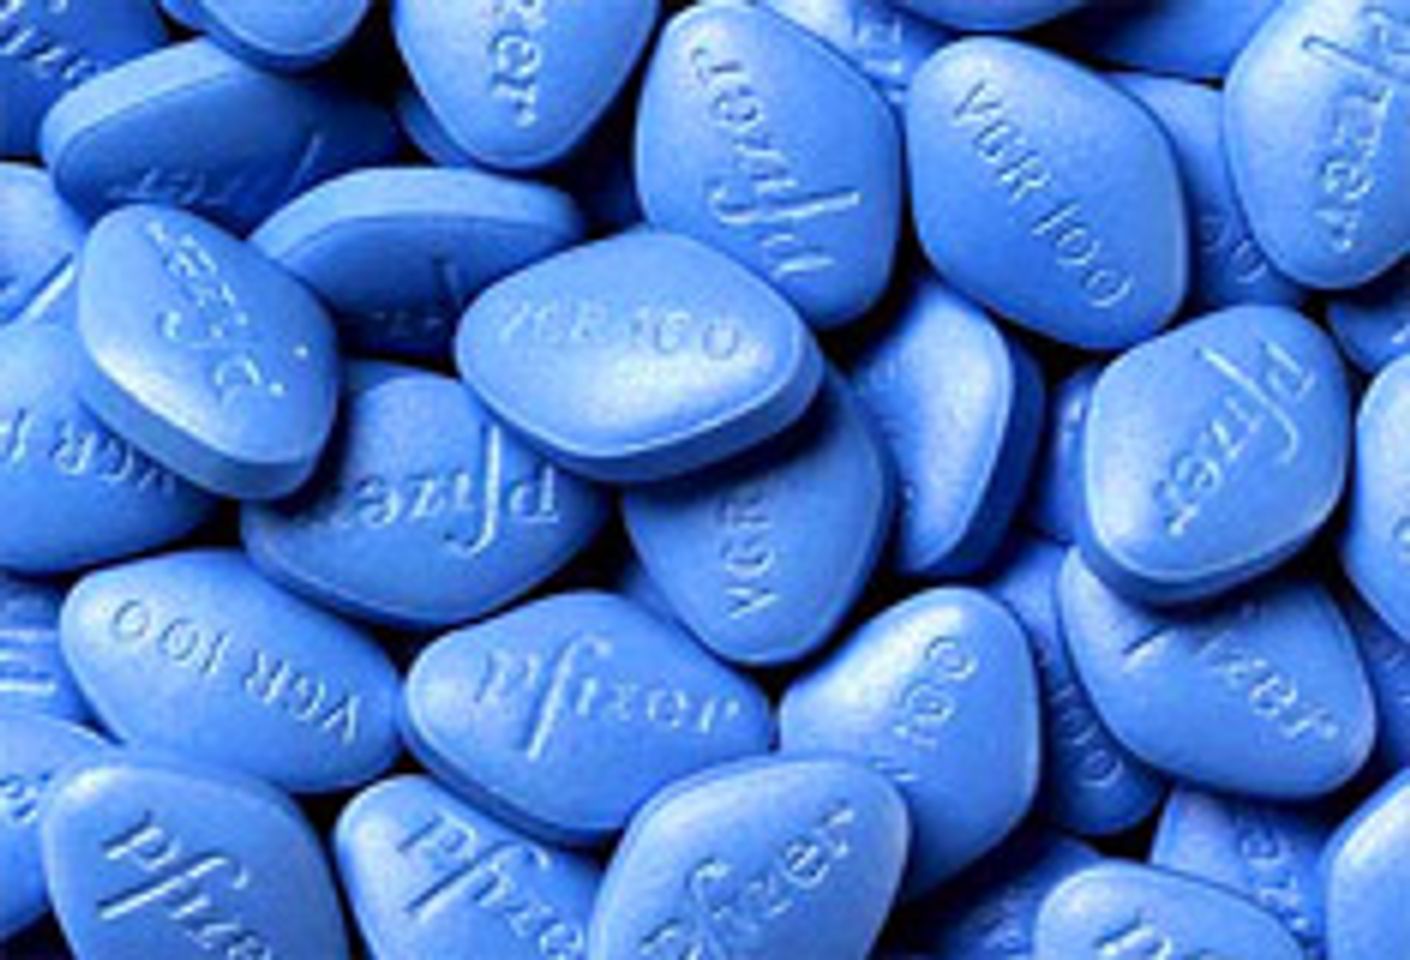 Pfizer to Litigate Against E-Pharmacies Selling Fake, "Generic" Viagra